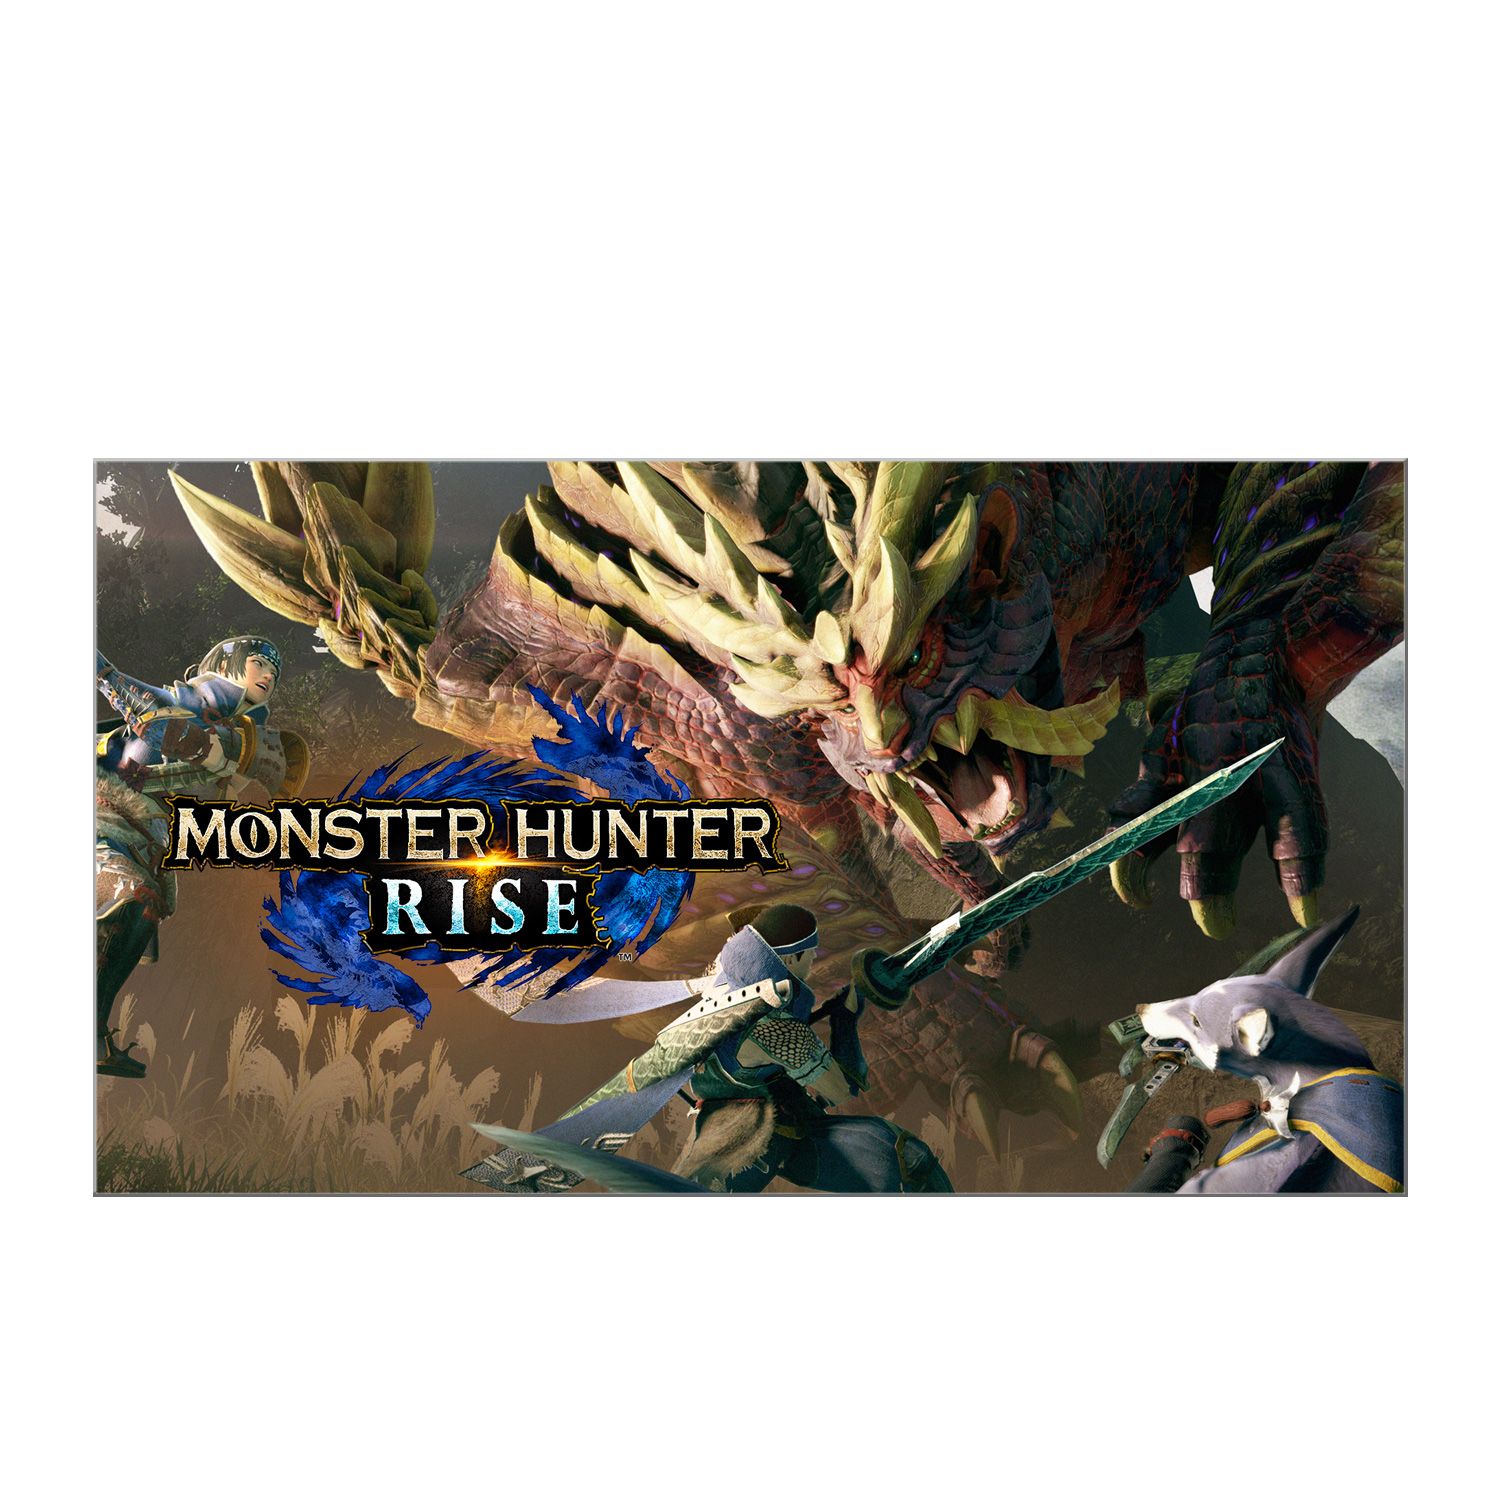 Monster Hunter Rise, Capcom, Nintendo Switch [Digital Download] $20.00